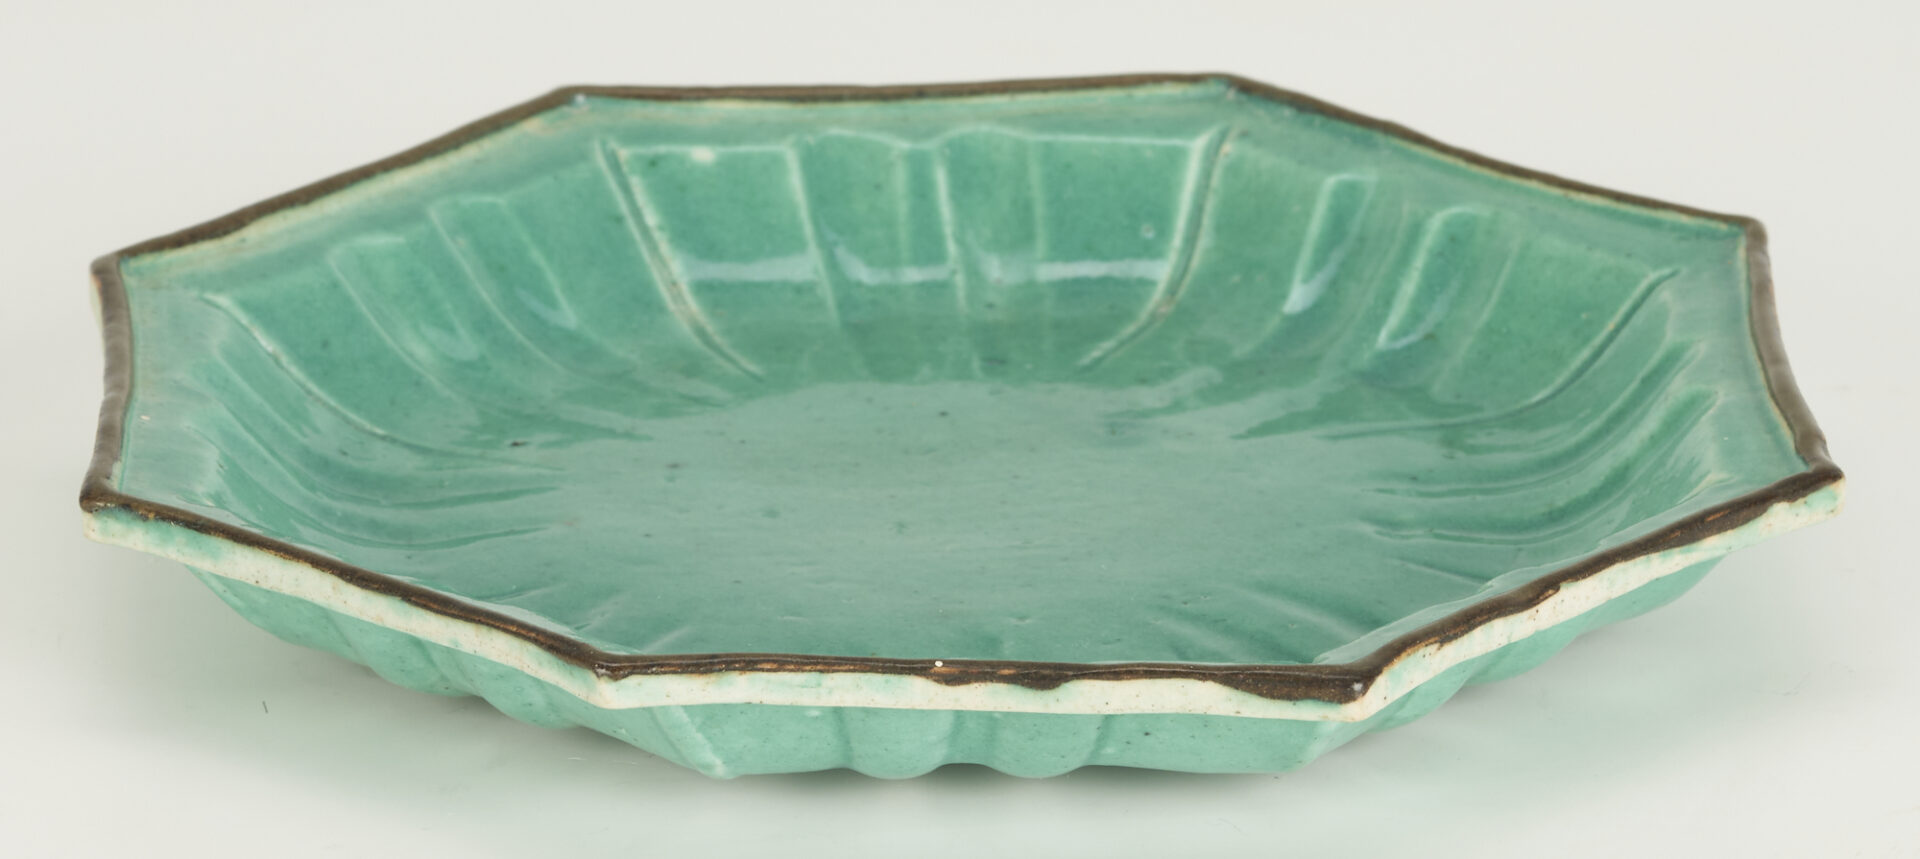 Lot 193: 17 Chinese Ceramic Items, Altar Fruit, Pedestals & Dish